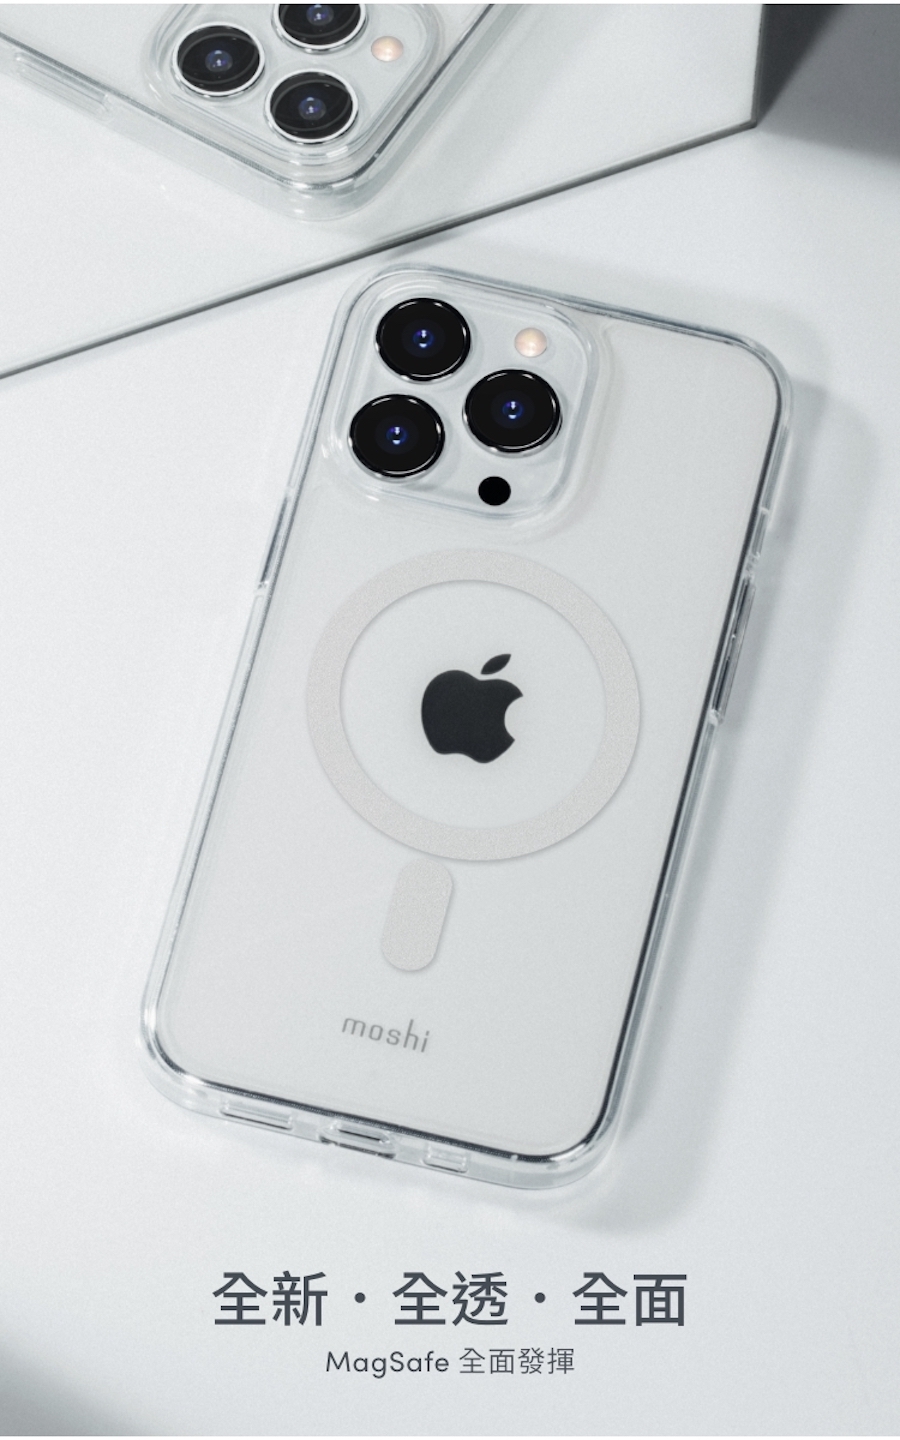 Moshi Arx Clear MagSafe 磁吸輕量透明保護殼 for iPhone 13 系列 - 商品介紹